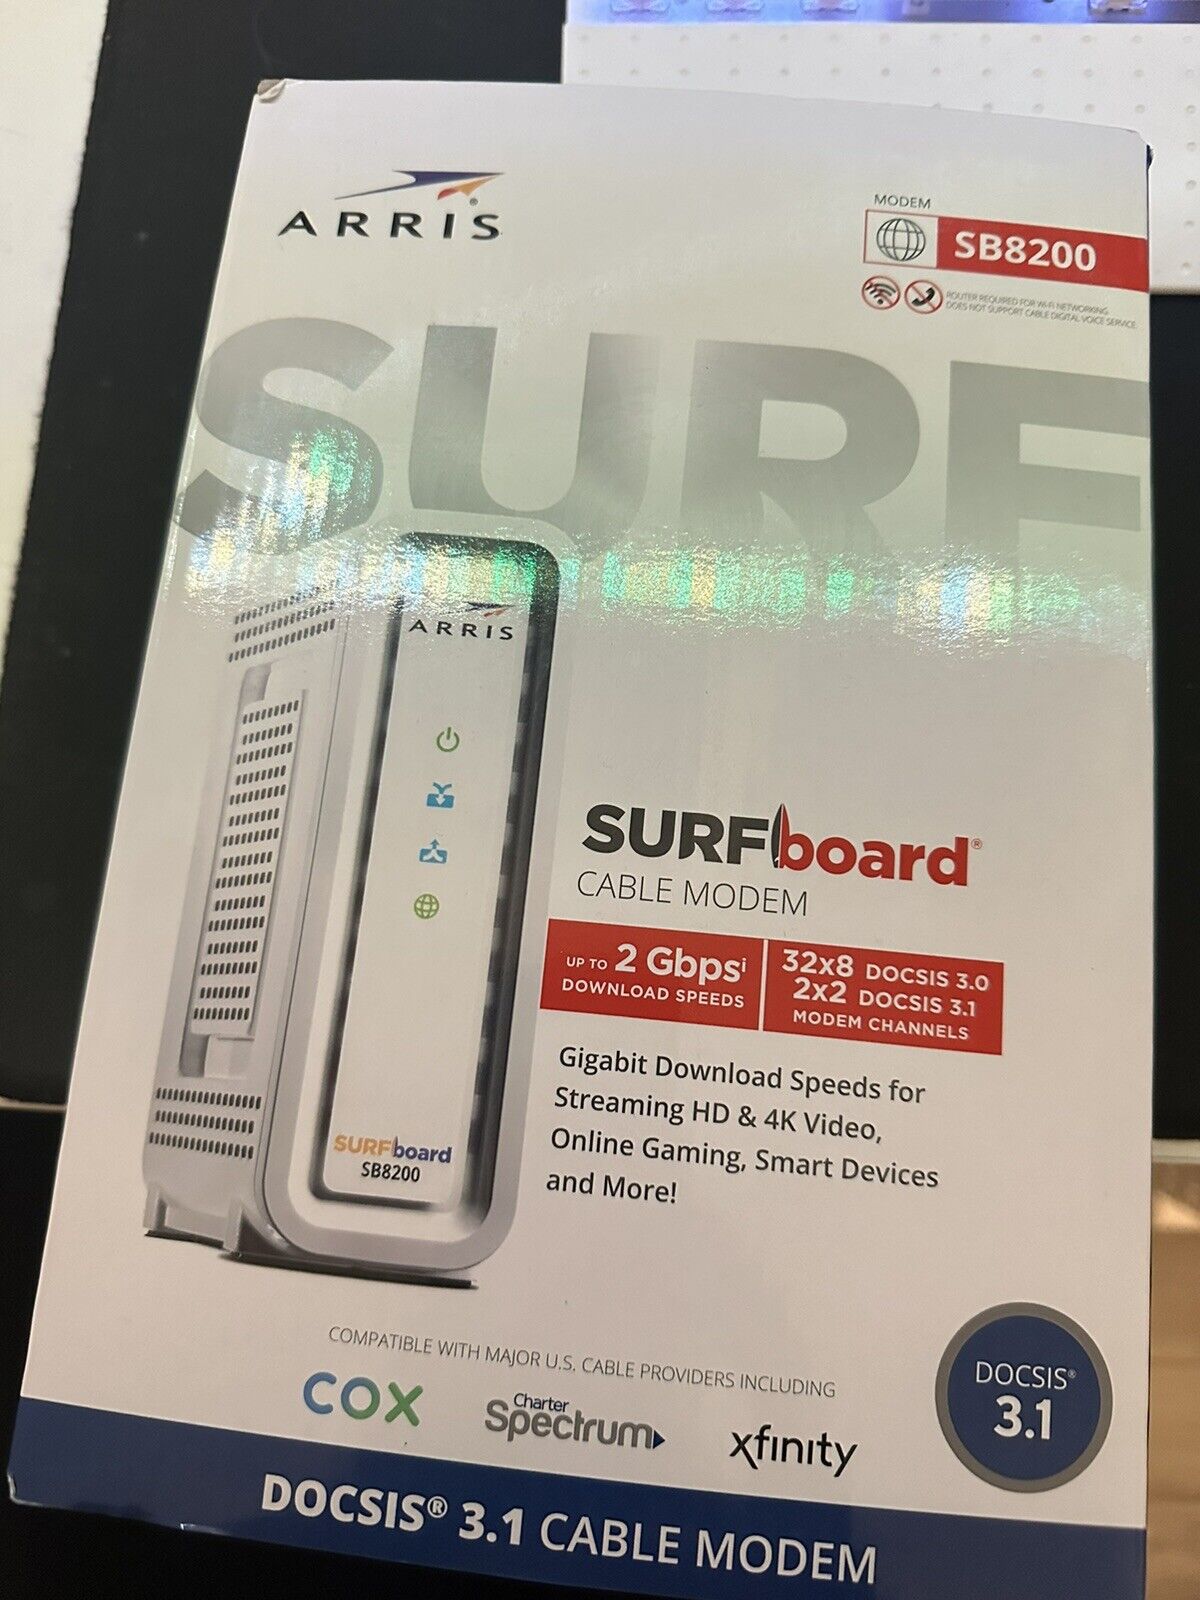 ARRIS SURFboard SB8200 DOCSIS 3.1 10 Gbps Cable Modem